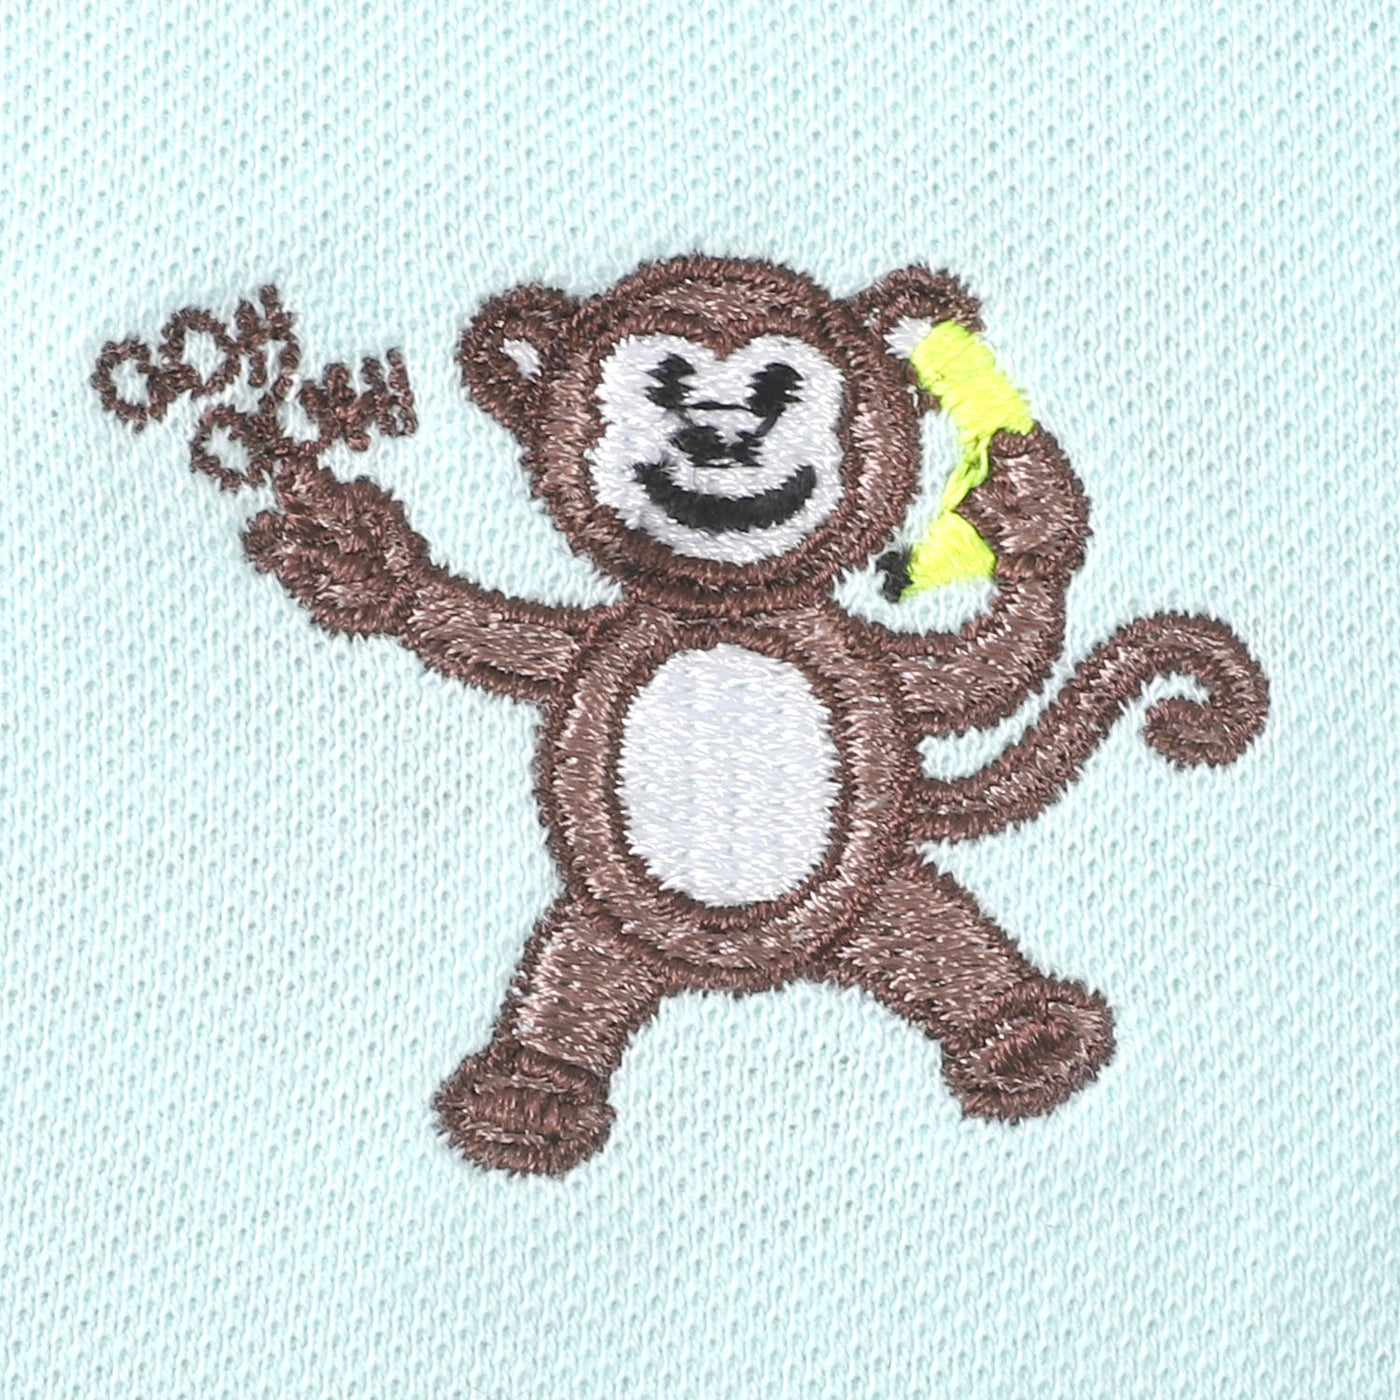 Infant Boys T-shirt Polo Monkey - Moon Light